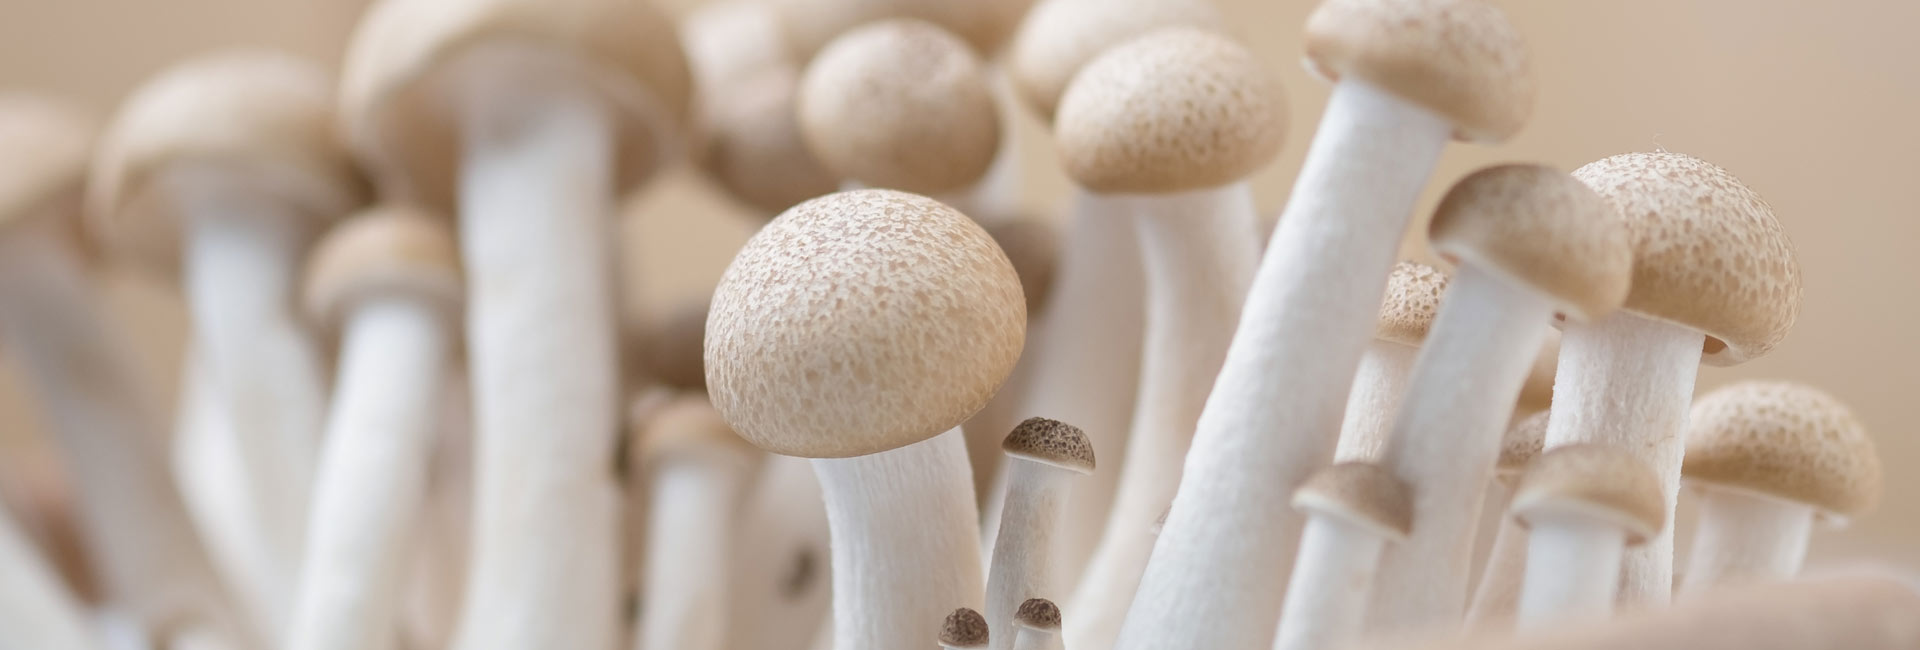 Mushroom Month: It’s Time to Celebrate Mushrooms